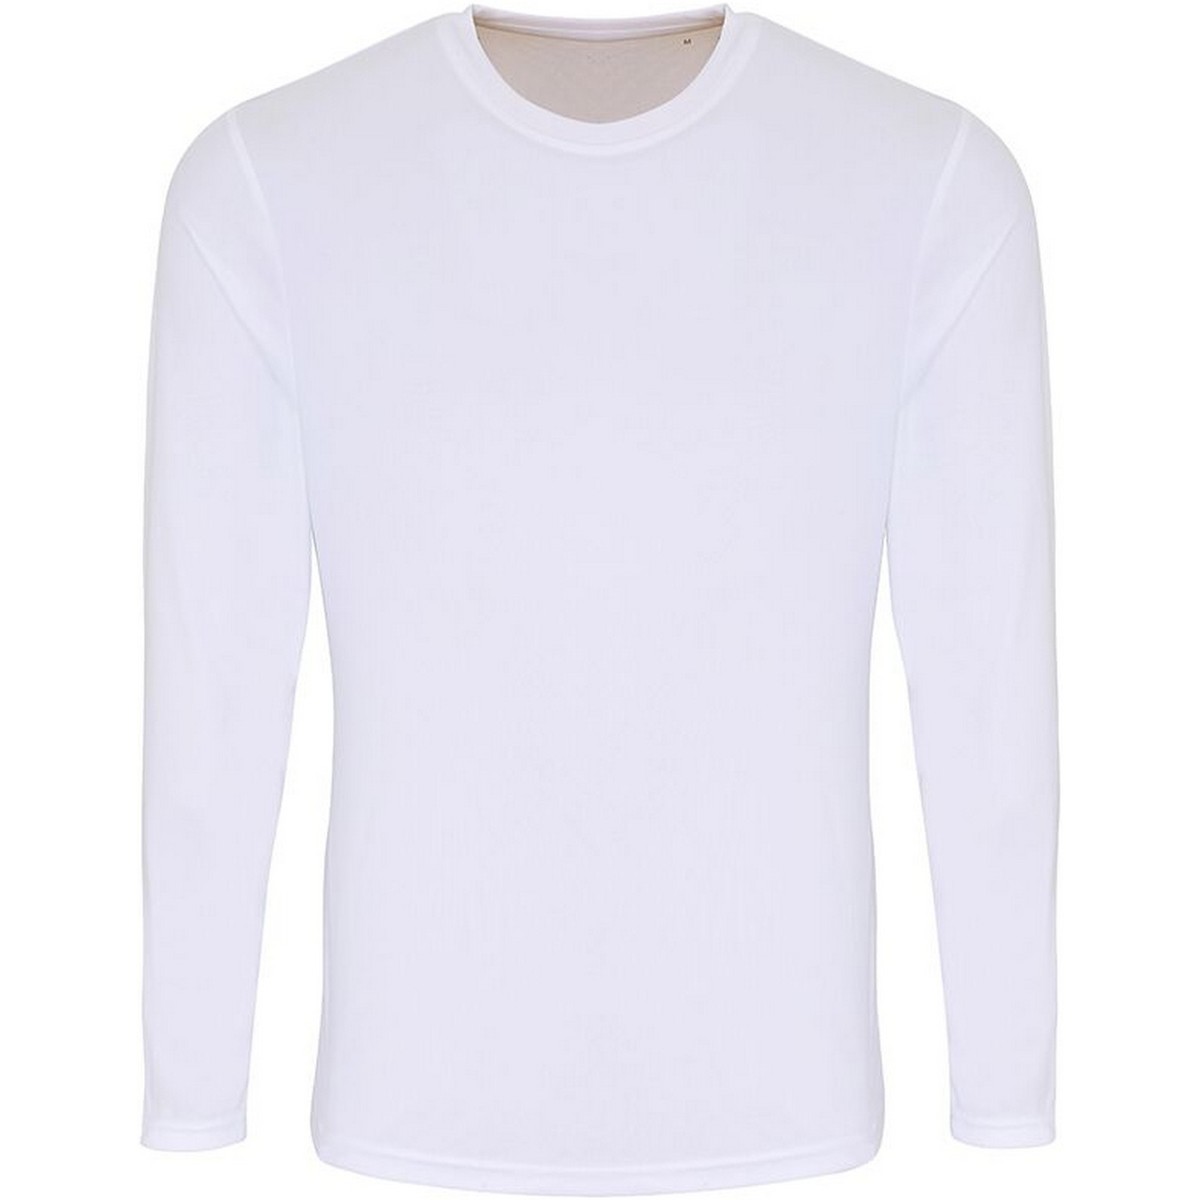 Vêtements Homme T-shirts manches longues Tridri TR050 Blanc